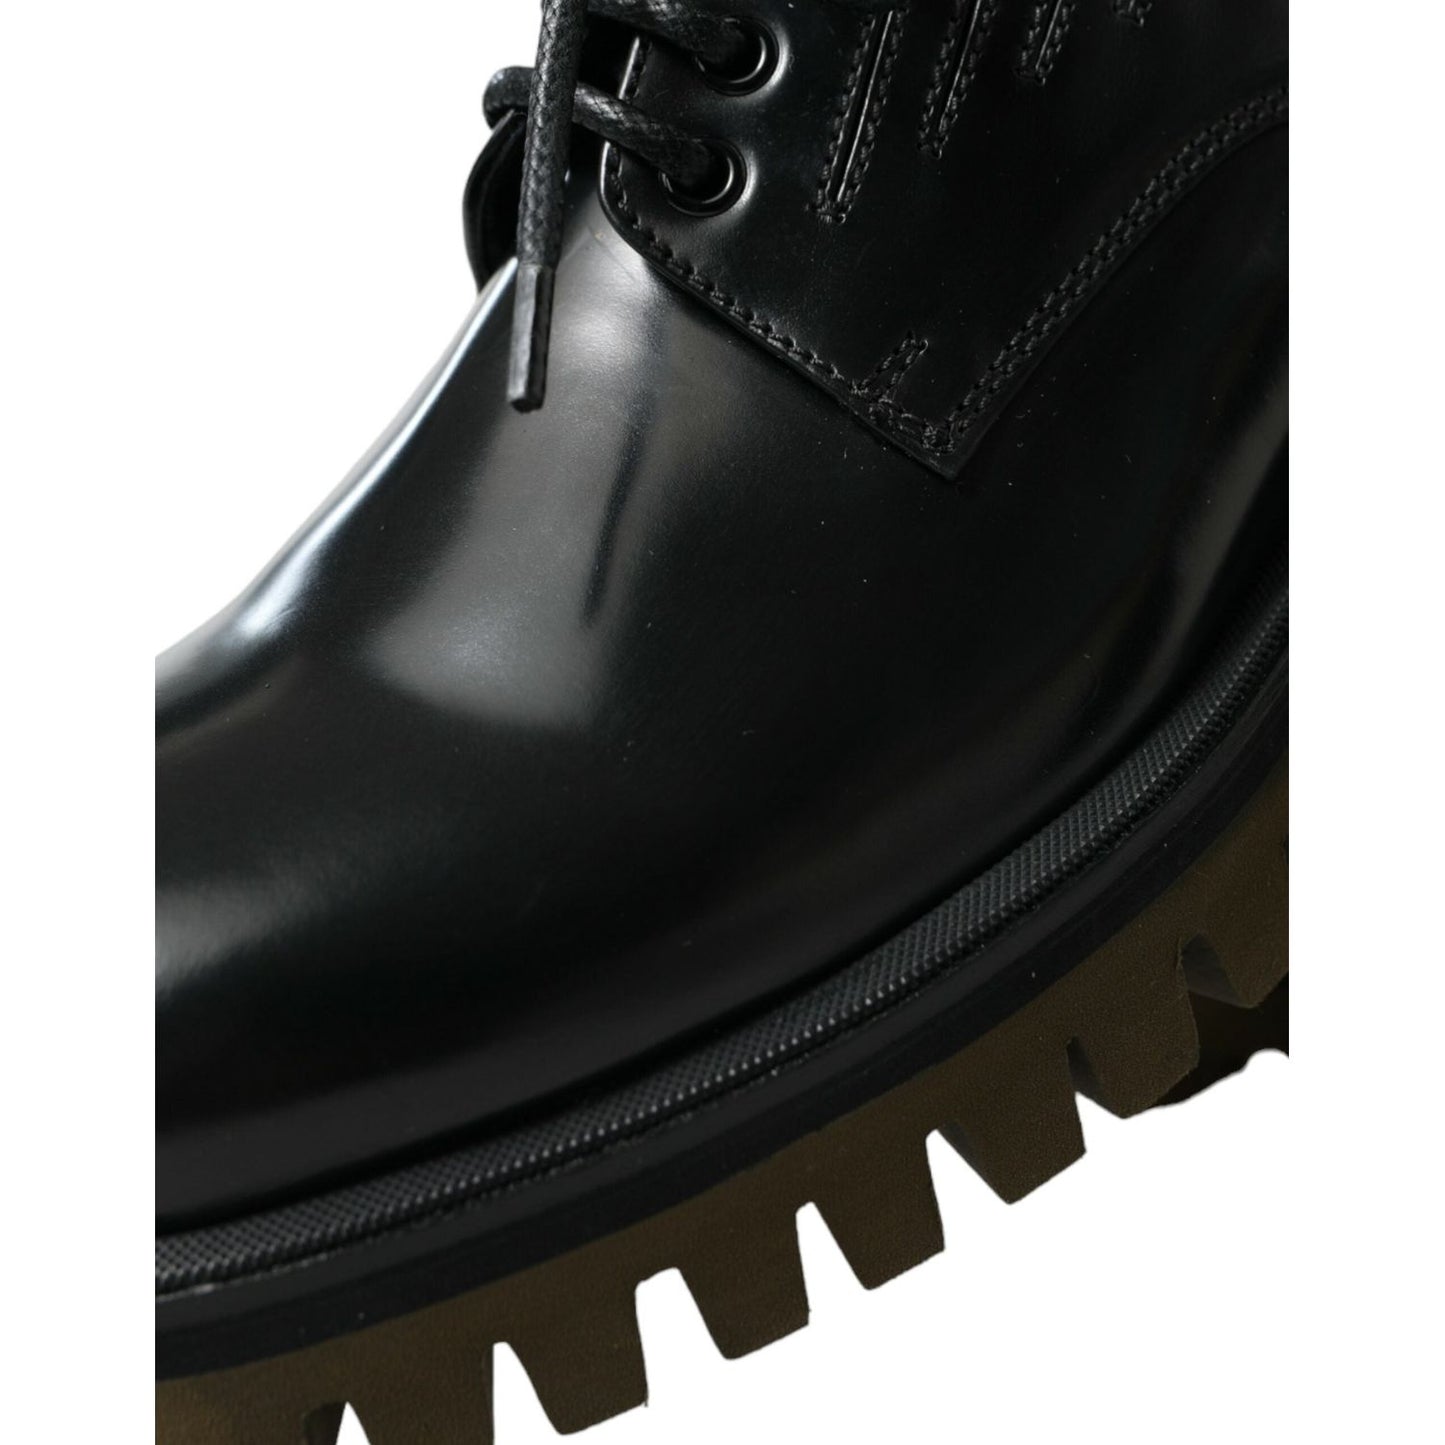 Dolce & Gabbana Elegant Black Leather Derby Dress Shoes black-leather-lace-up-derby-men-dress-shoes